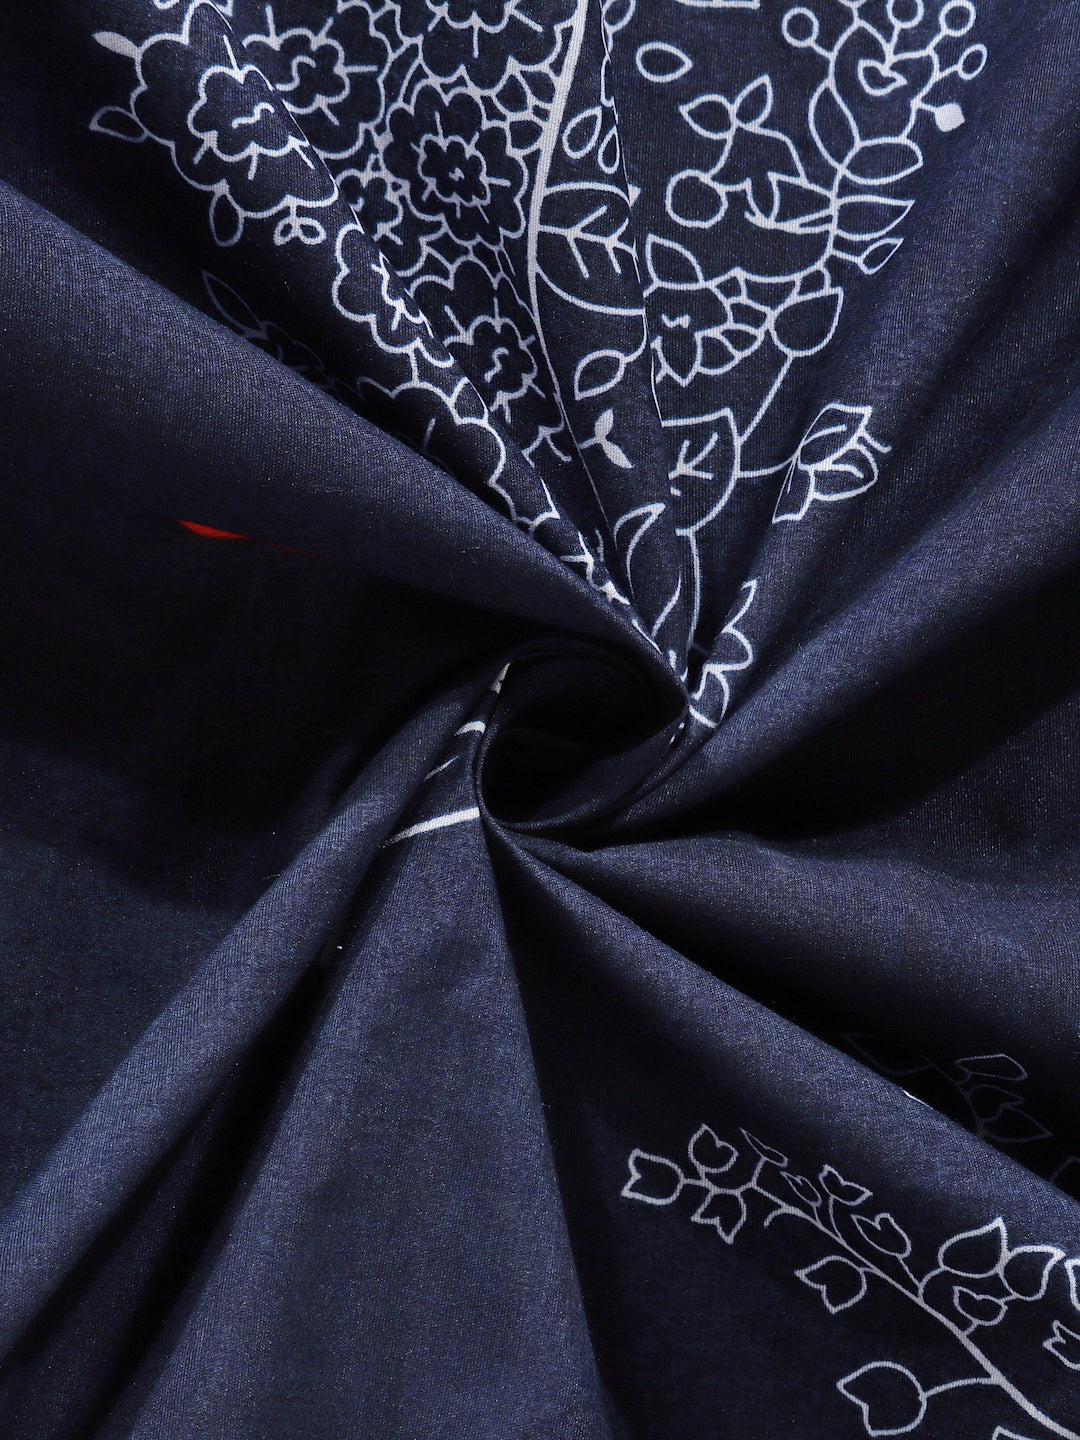 Klotthe Multi Floral 300 TC Cotton Blend Super King Double Bedsheet Set in Book Fold Packing